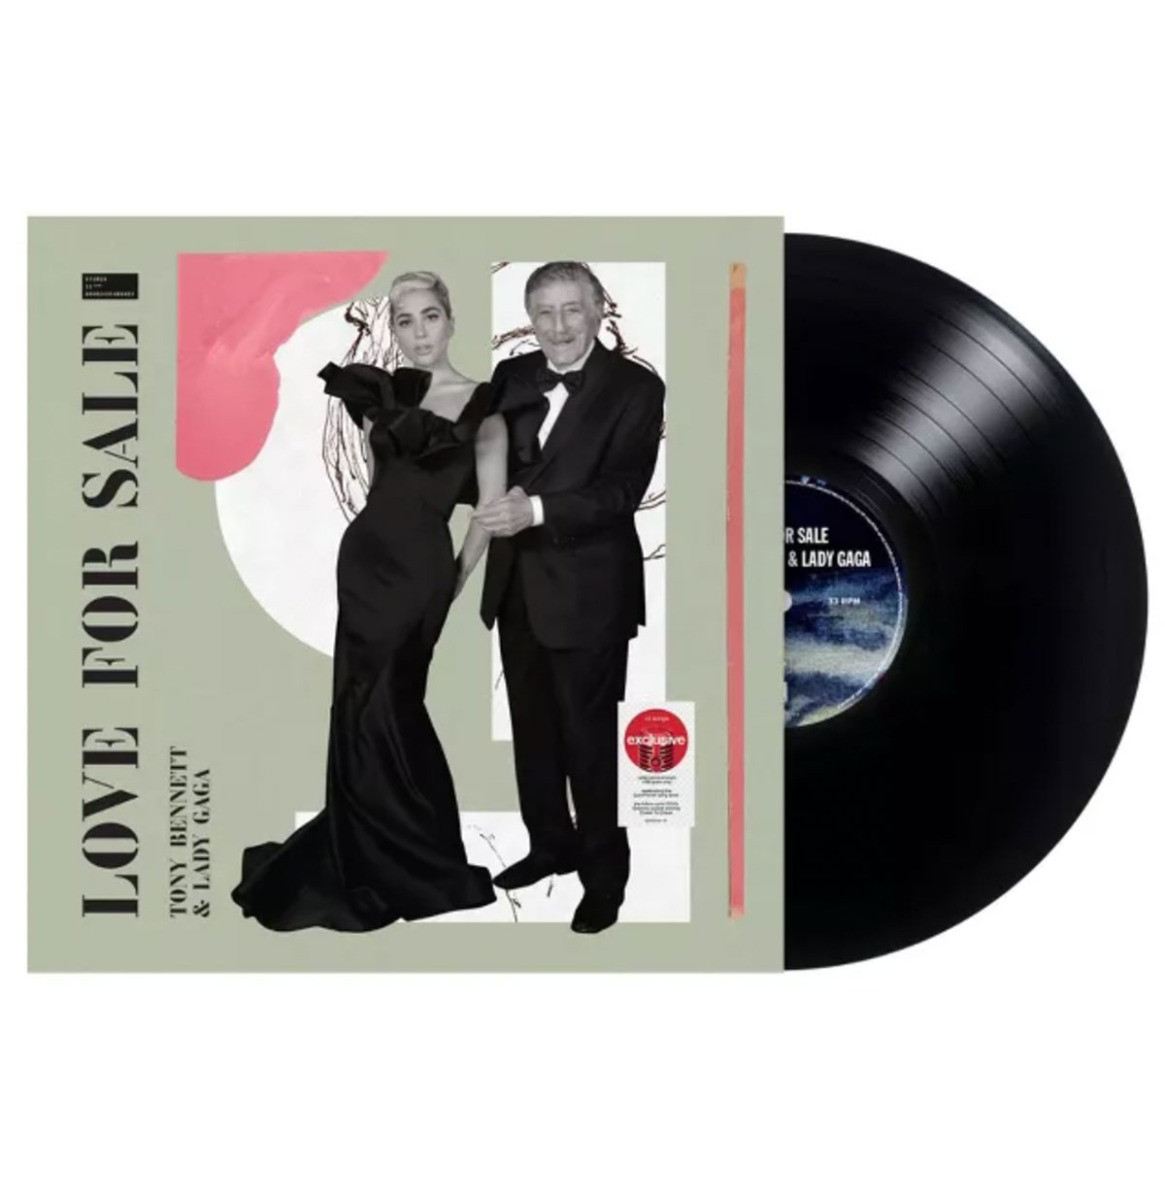 Tony Bennett & Lady Gaga - Love For Sale (Alternatieve Cover) LP